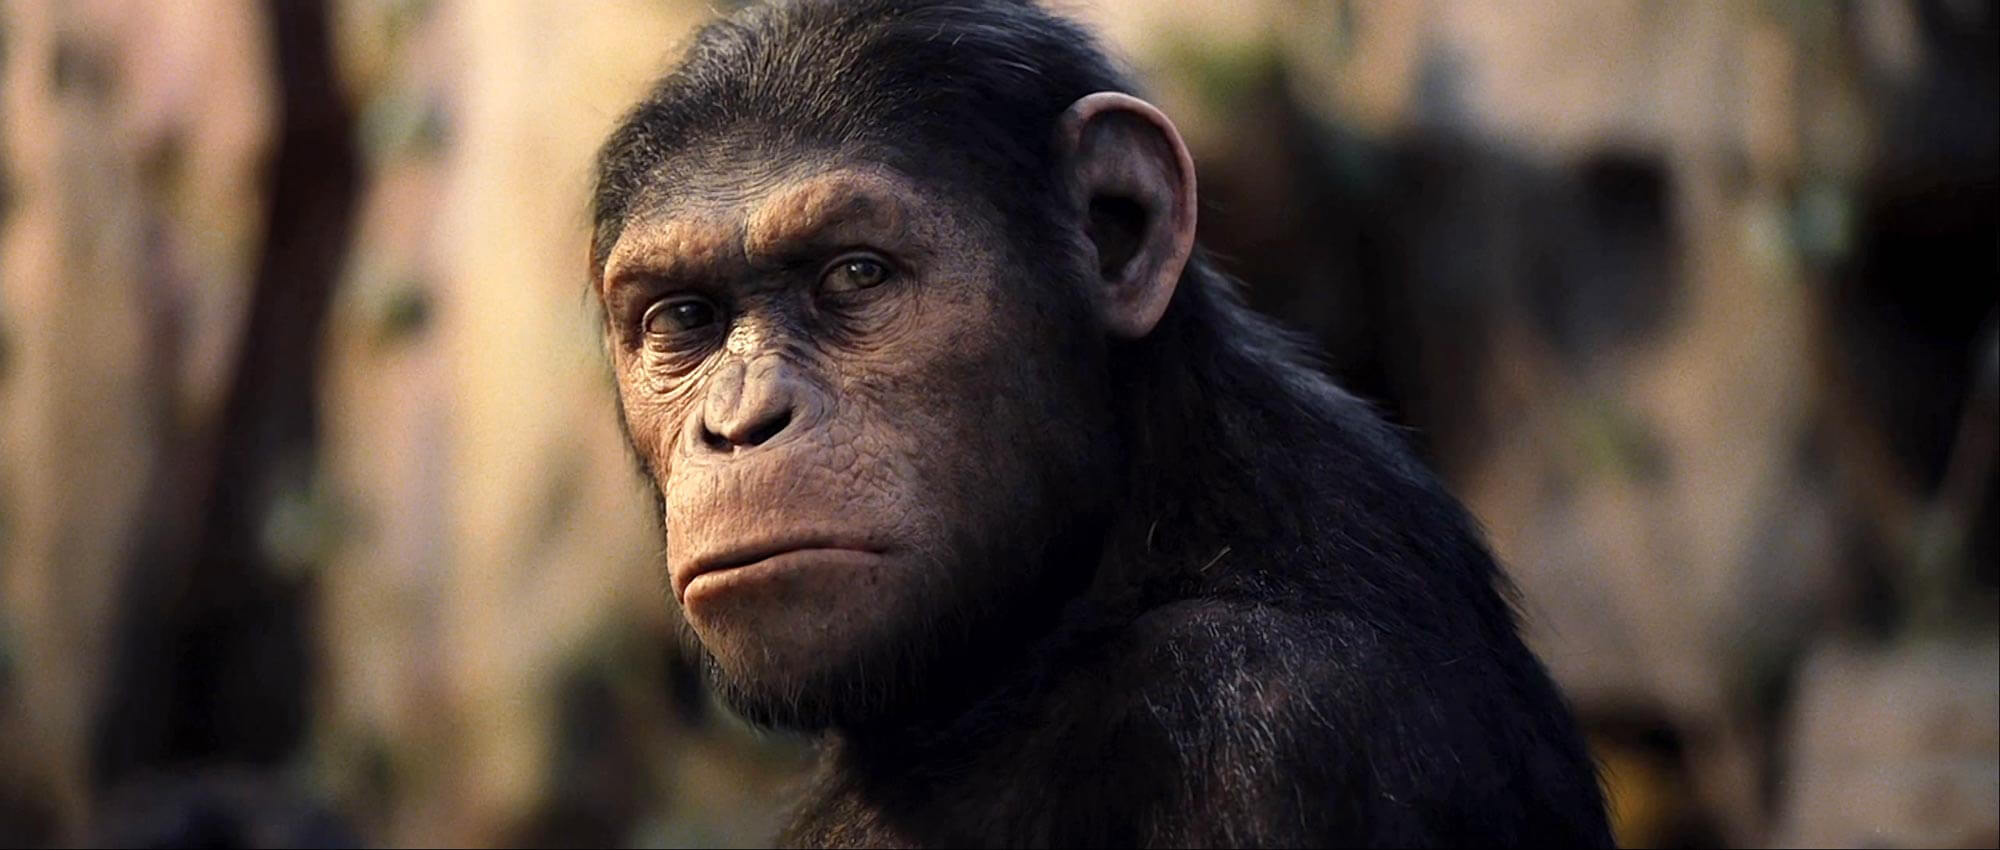 hans Milepæl Citere Rise of the Planet of the Apes | PETA